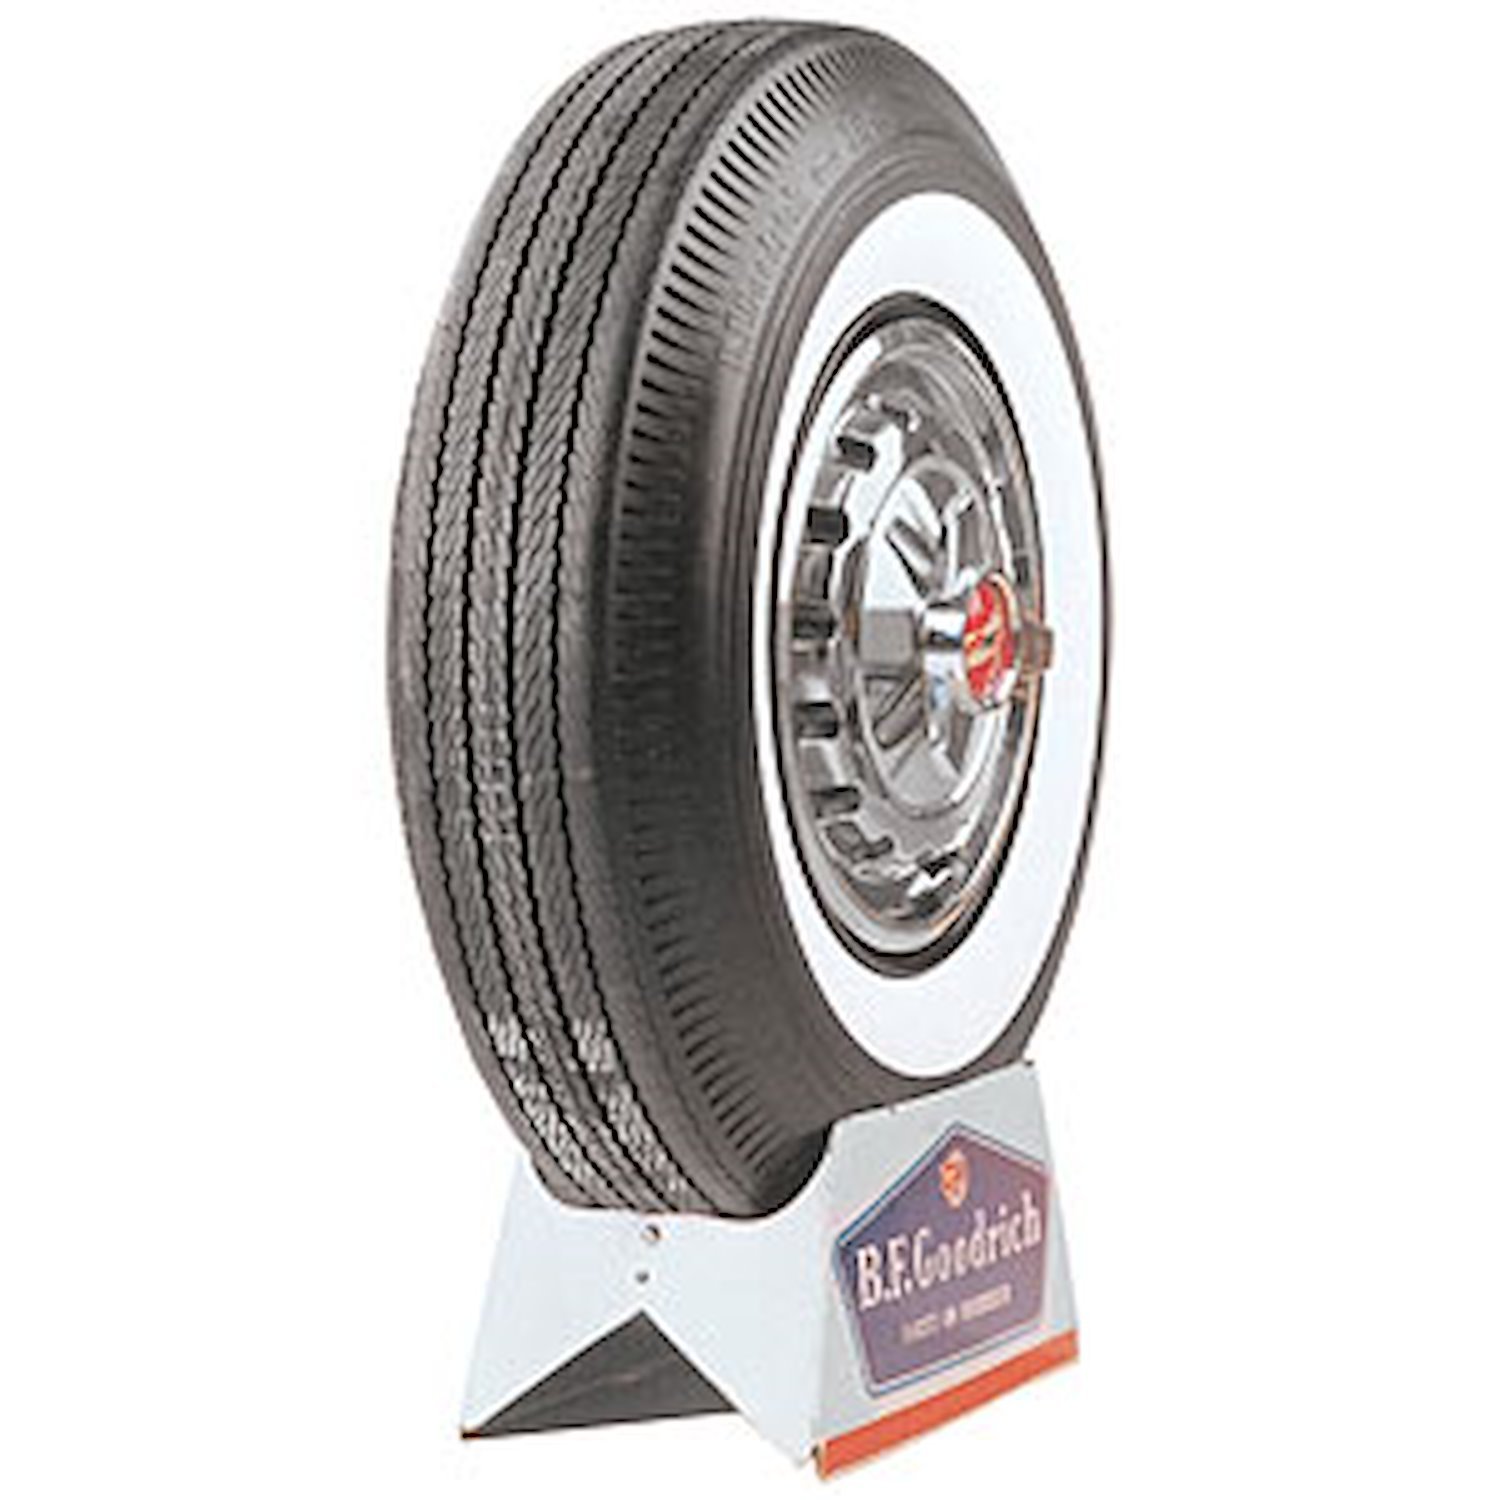 BFGoodrich Silvertown Whitewall Bias Ply Tire 520-12 ( 3.25" x 21.15" - 12" )